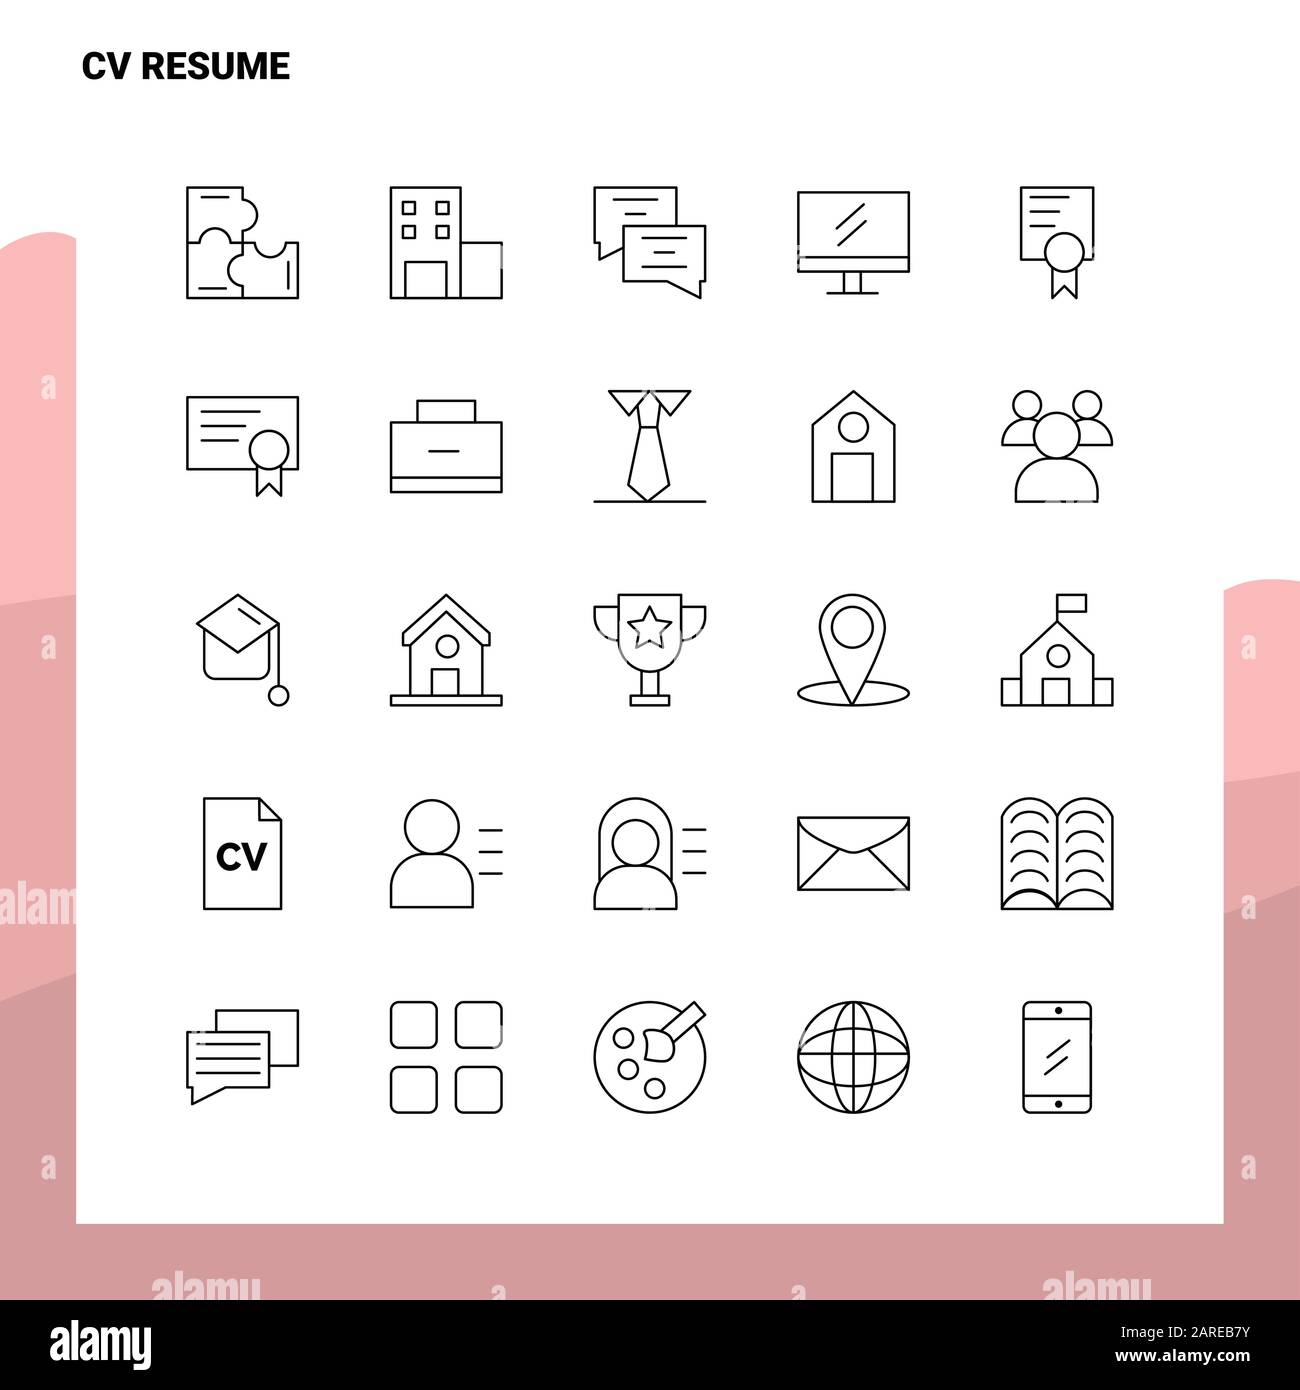 resume icon vector